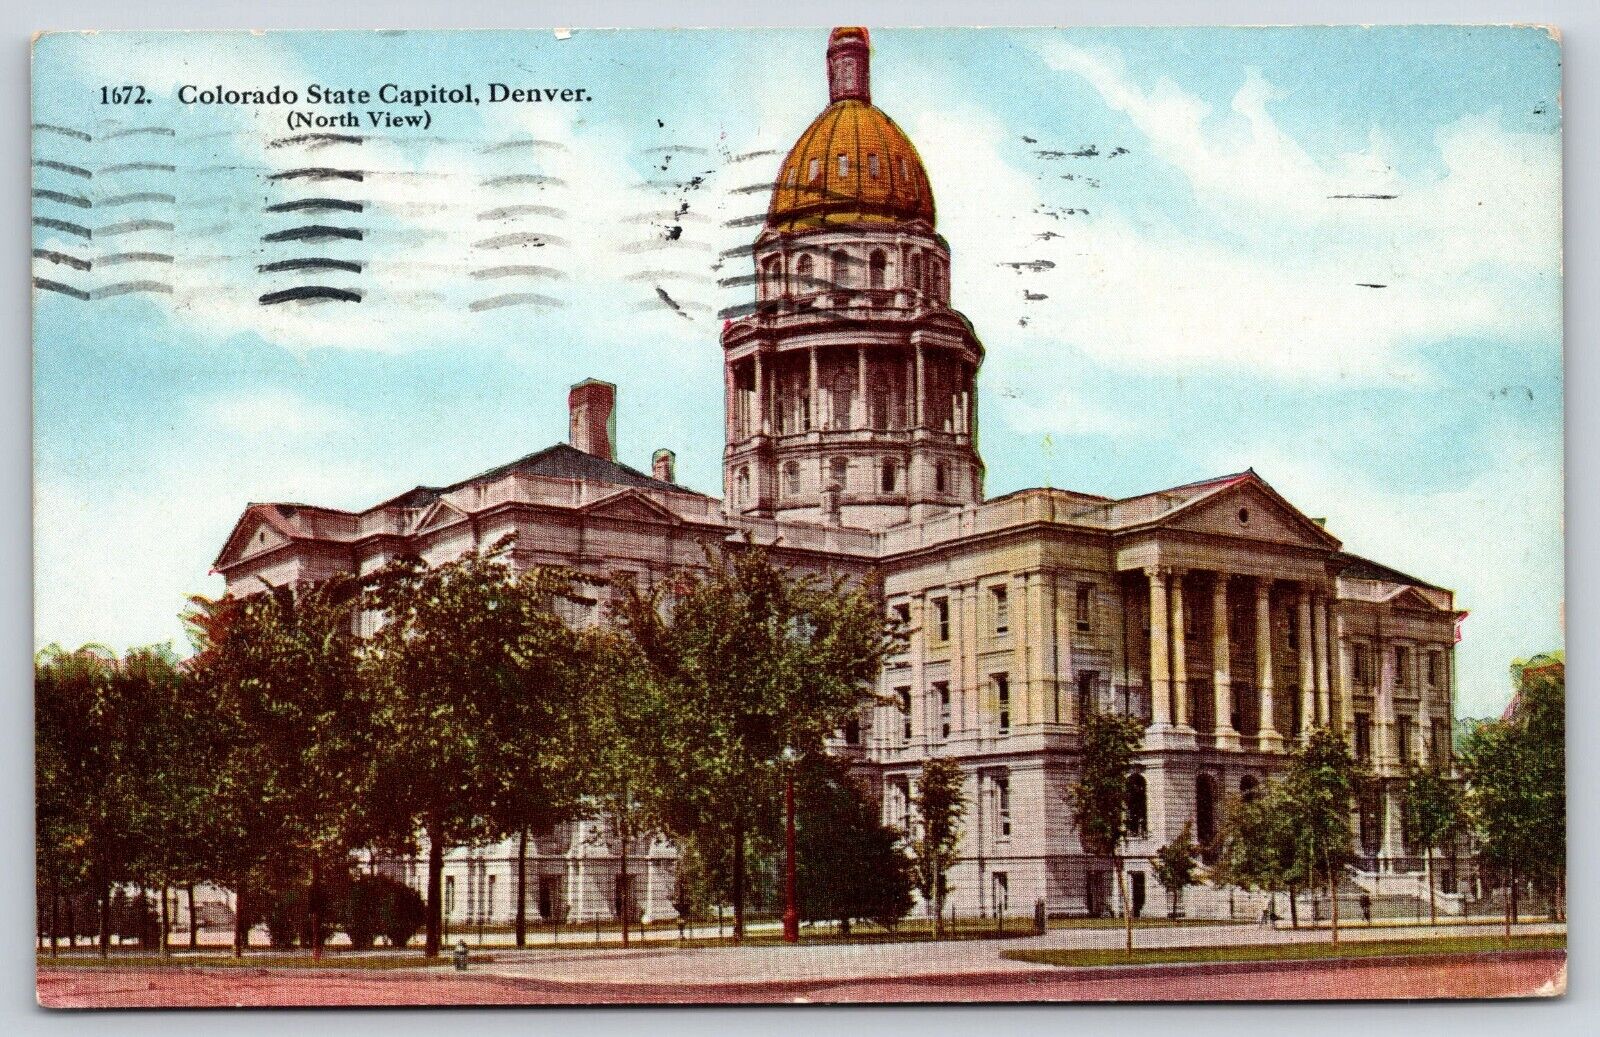 Original Vintage Antique Postcard Colorado State Capitol Denver, Colorado 1910